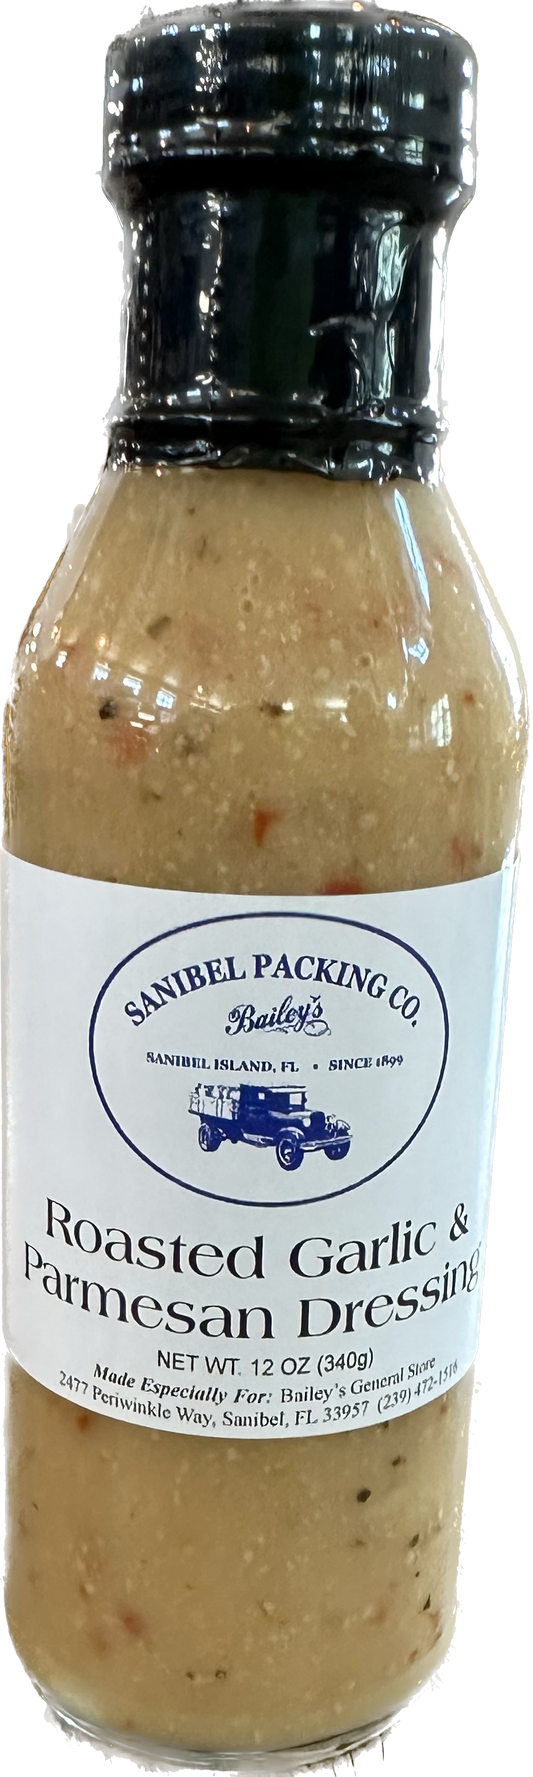 Roasted Garlic & Parmesan Dressing by Sanibel Packing Company